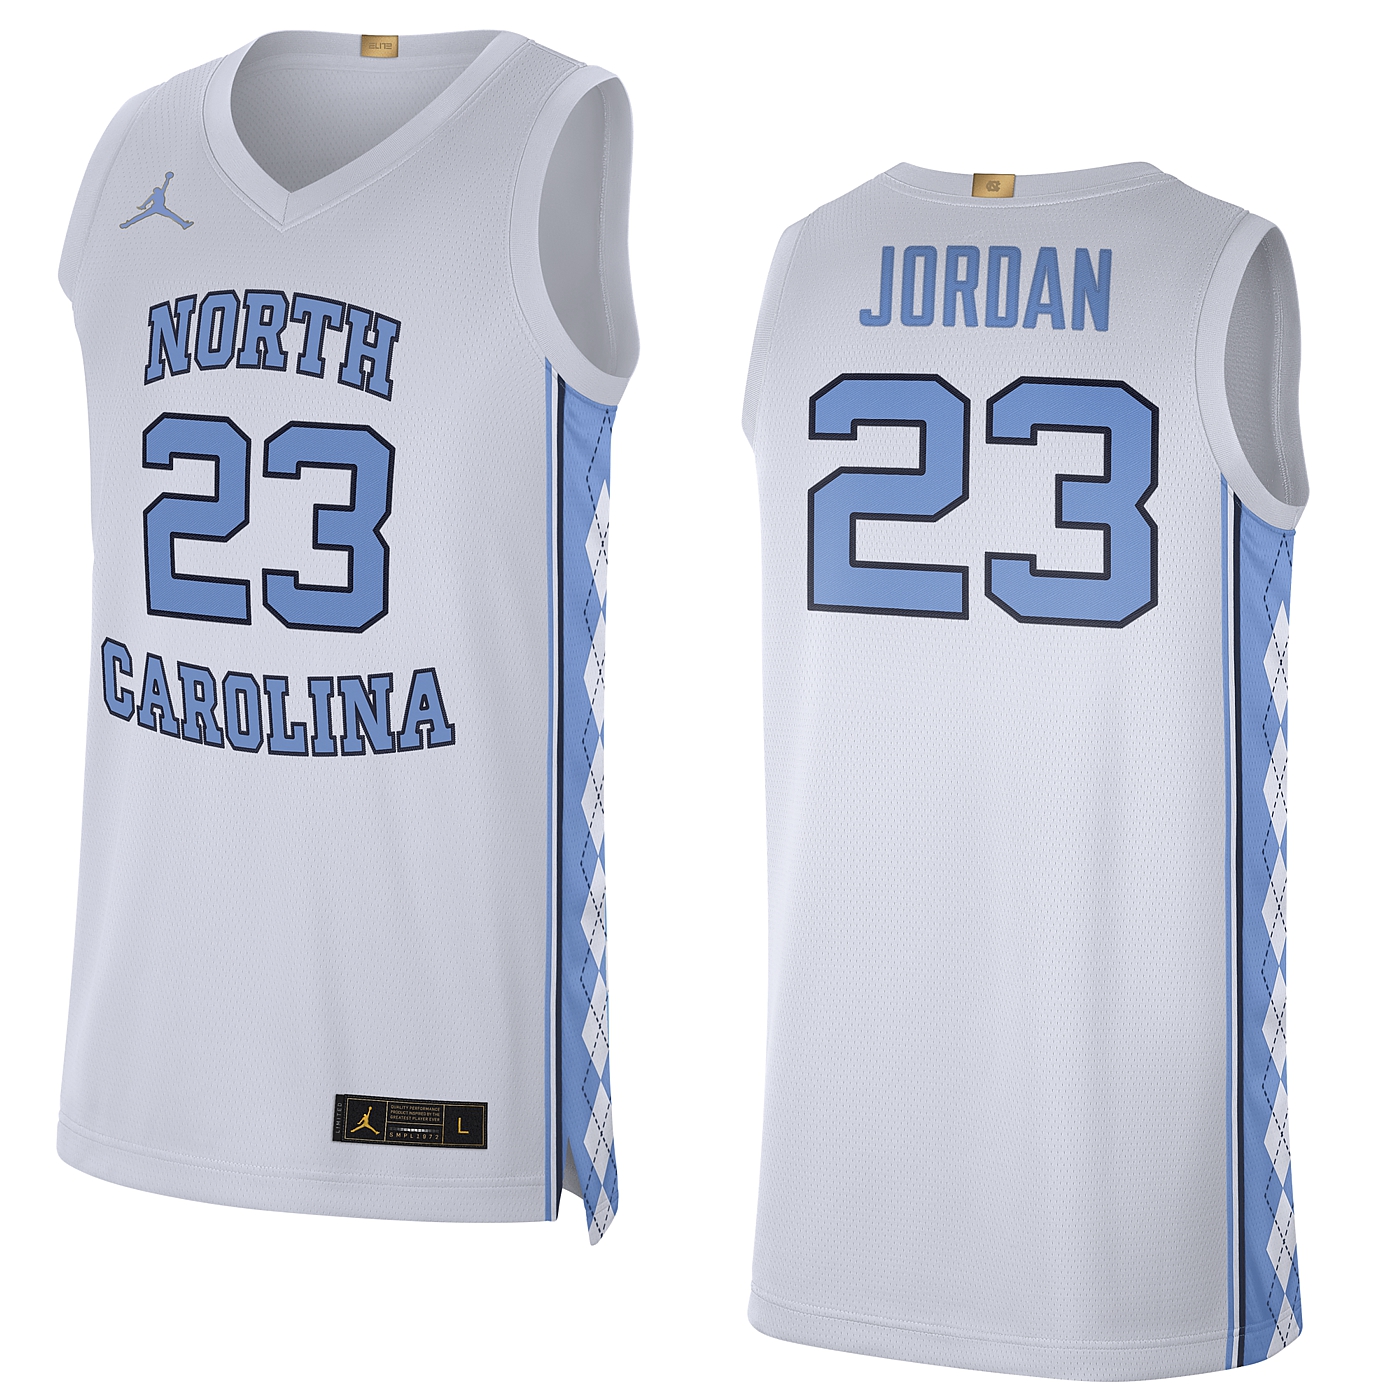 Johnny T-shirt - North Carolina Tar Heels - Nike Limited #23 Jordan  Basketball Jersey (White) by Nike